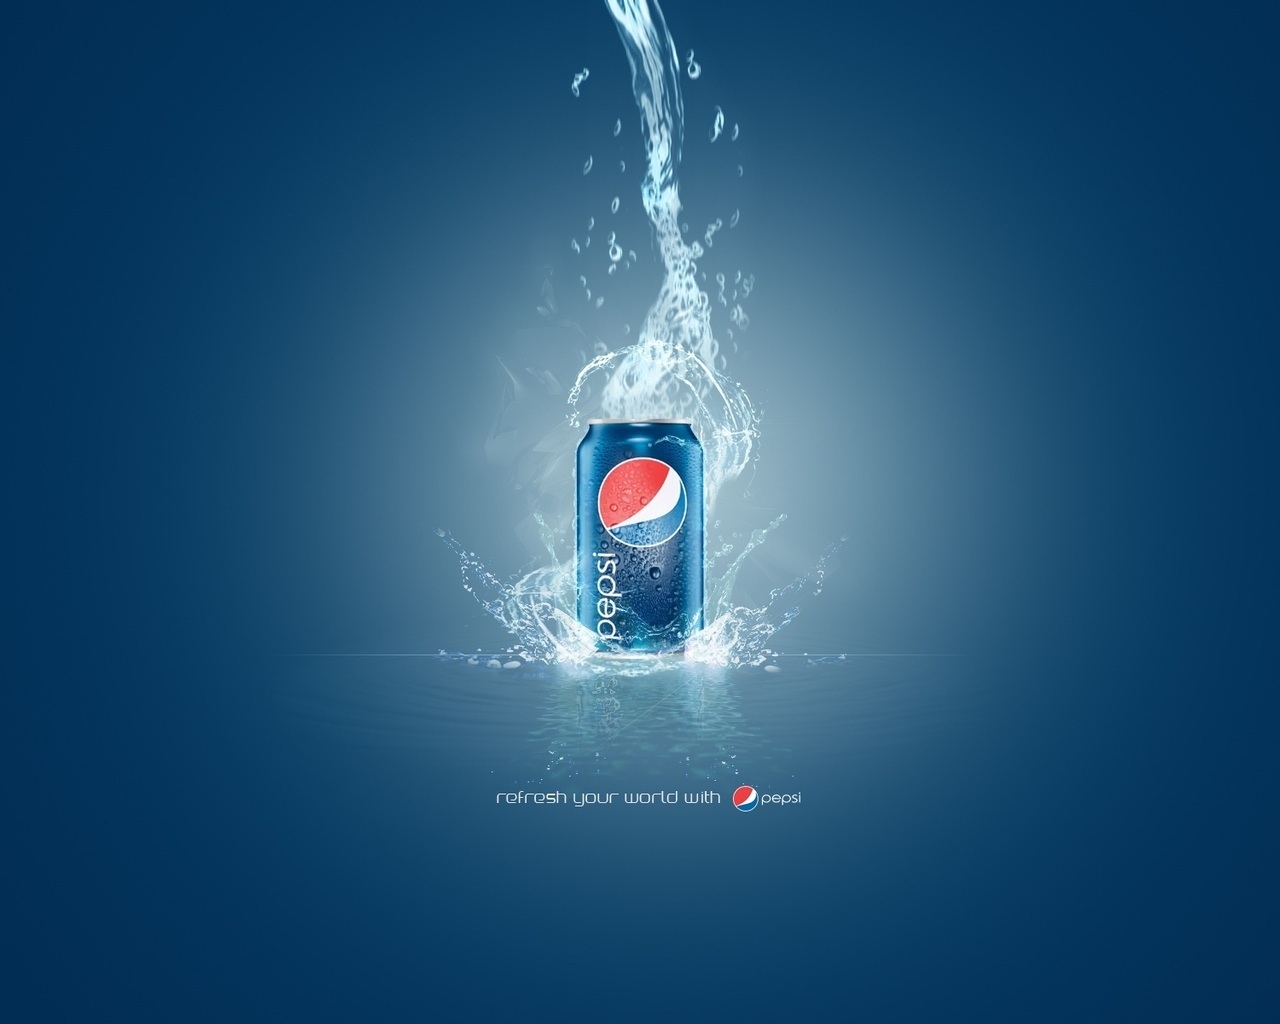 Pepsi for 1280 x 1024 resolution